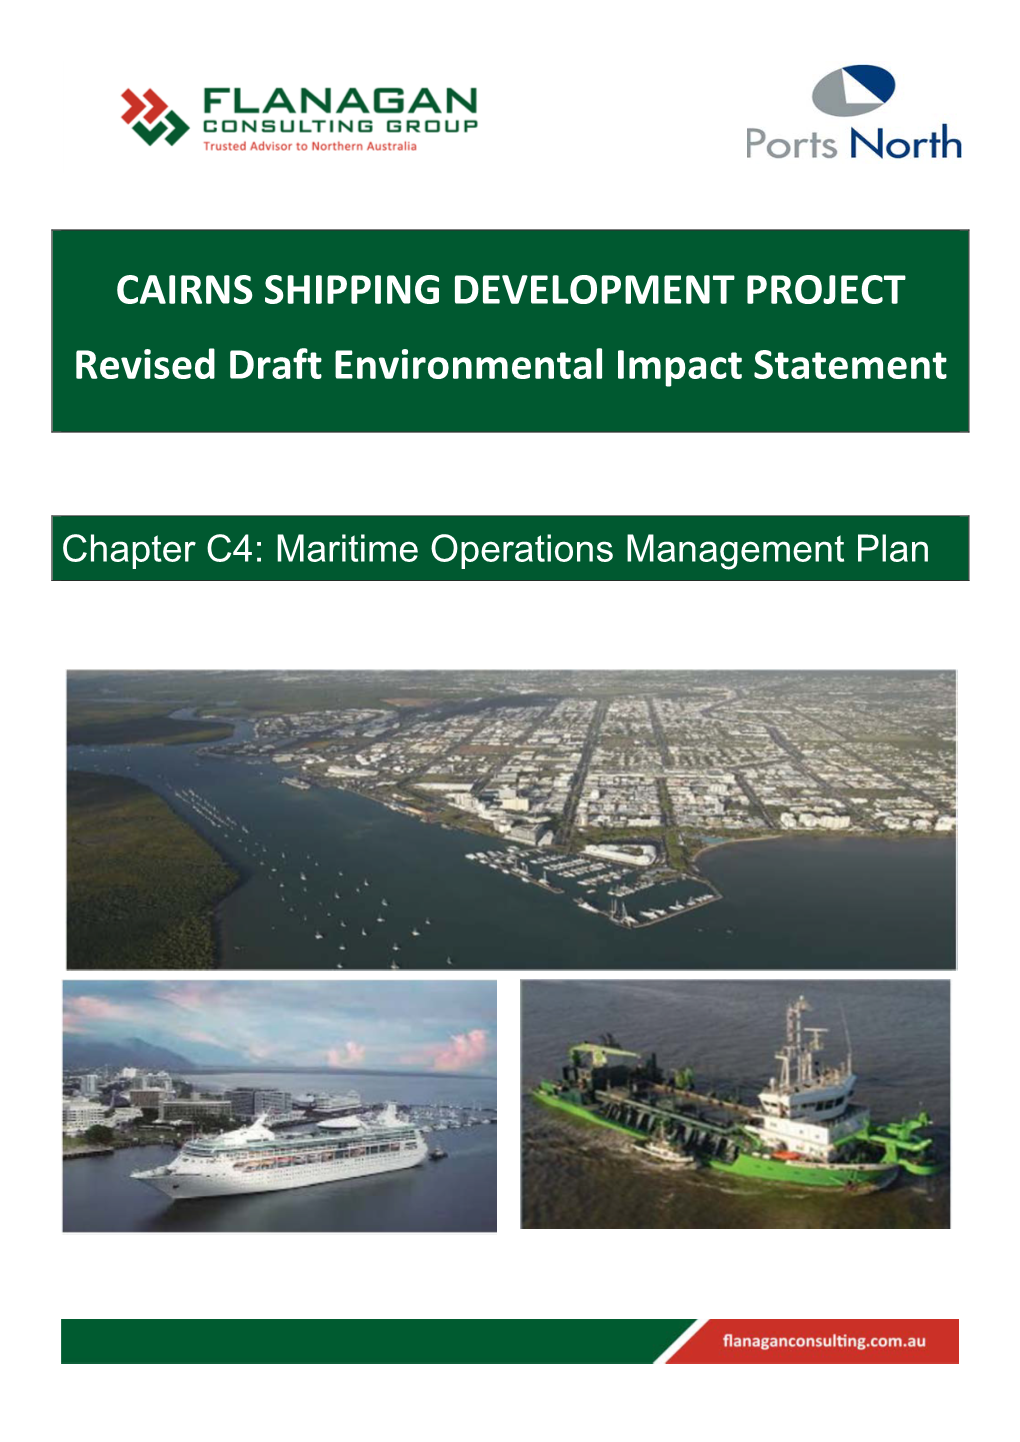 Maritime Operations Management Plan